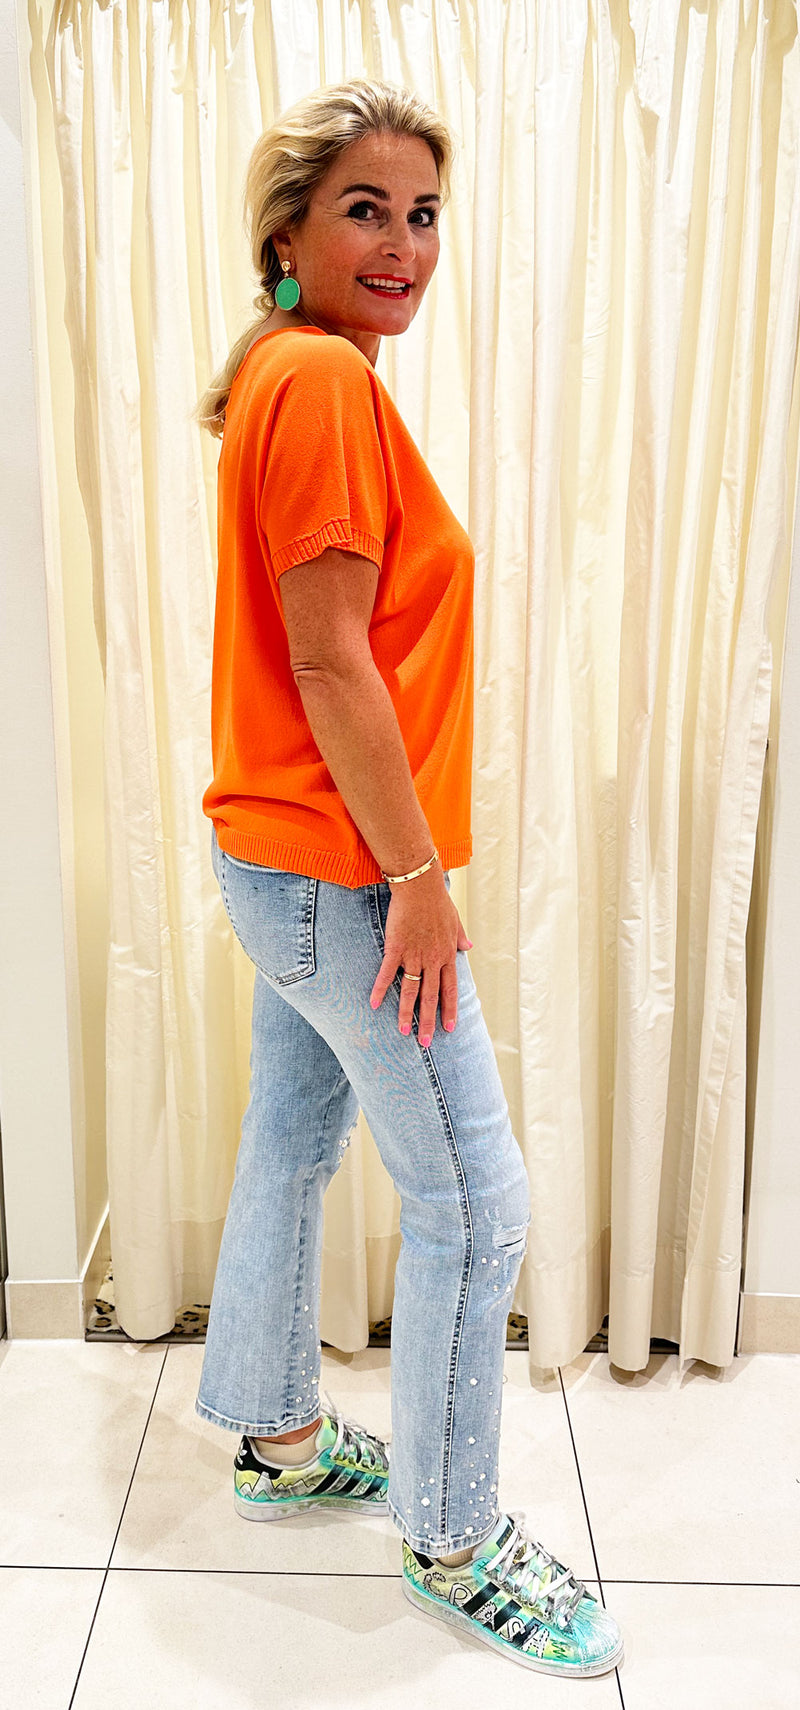 Shirt Orange